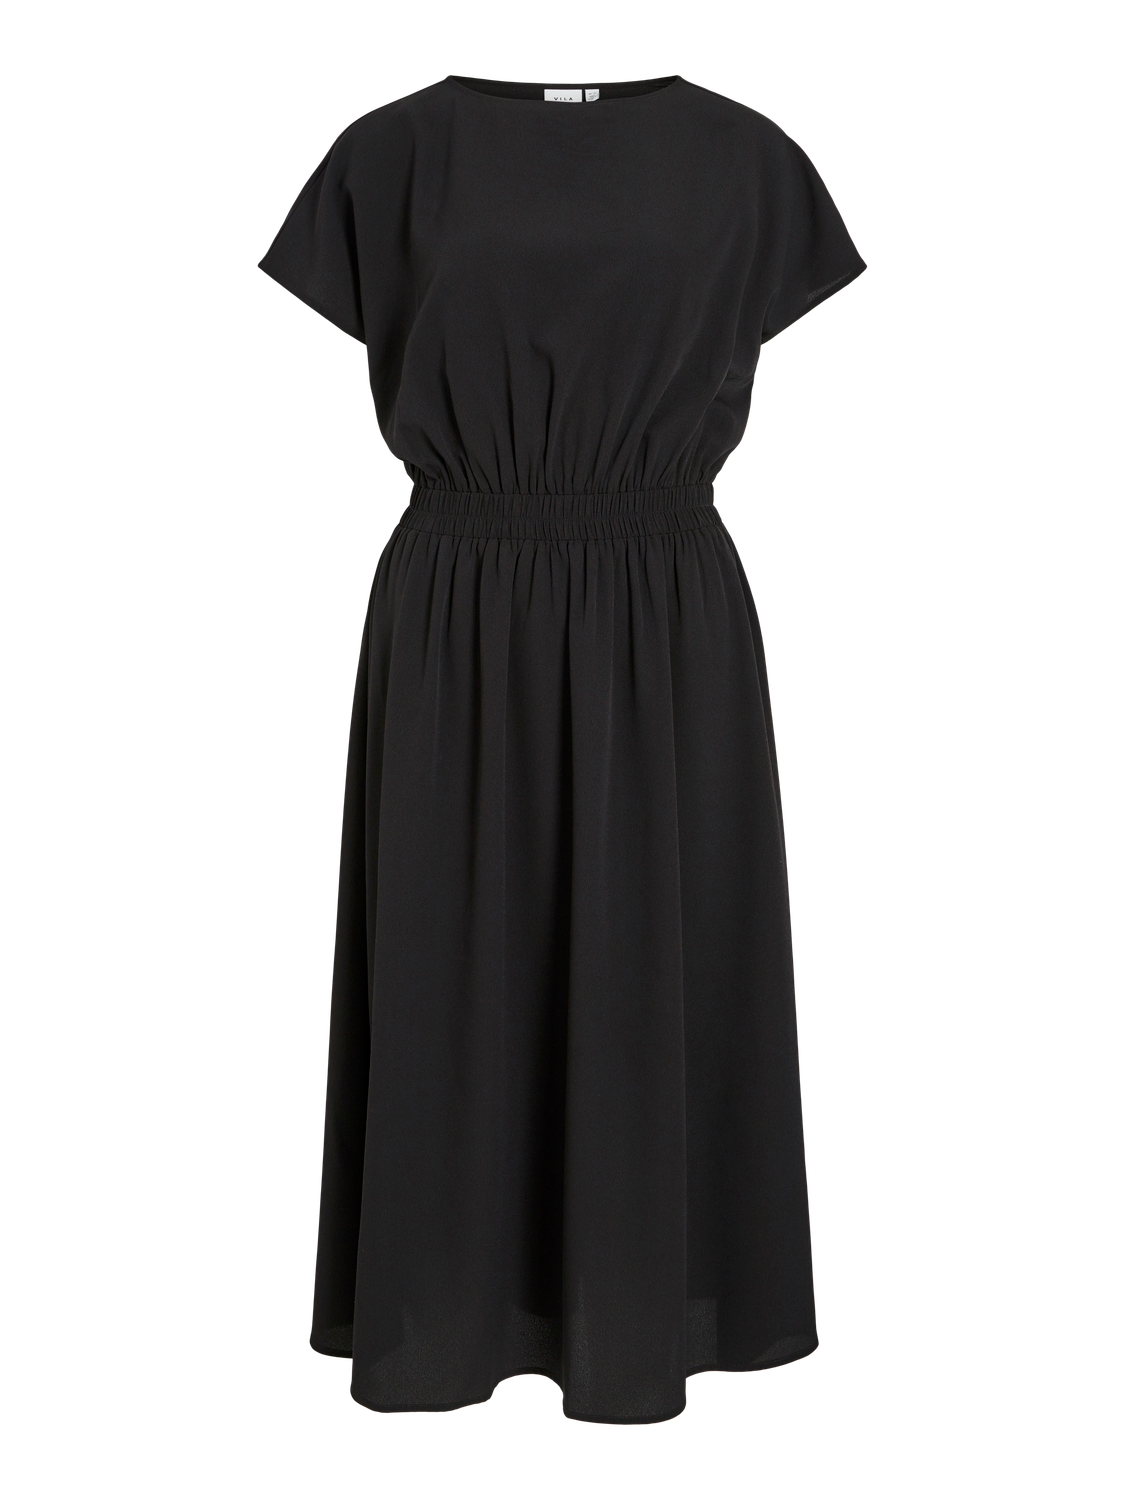 VIRIA Dress - Black